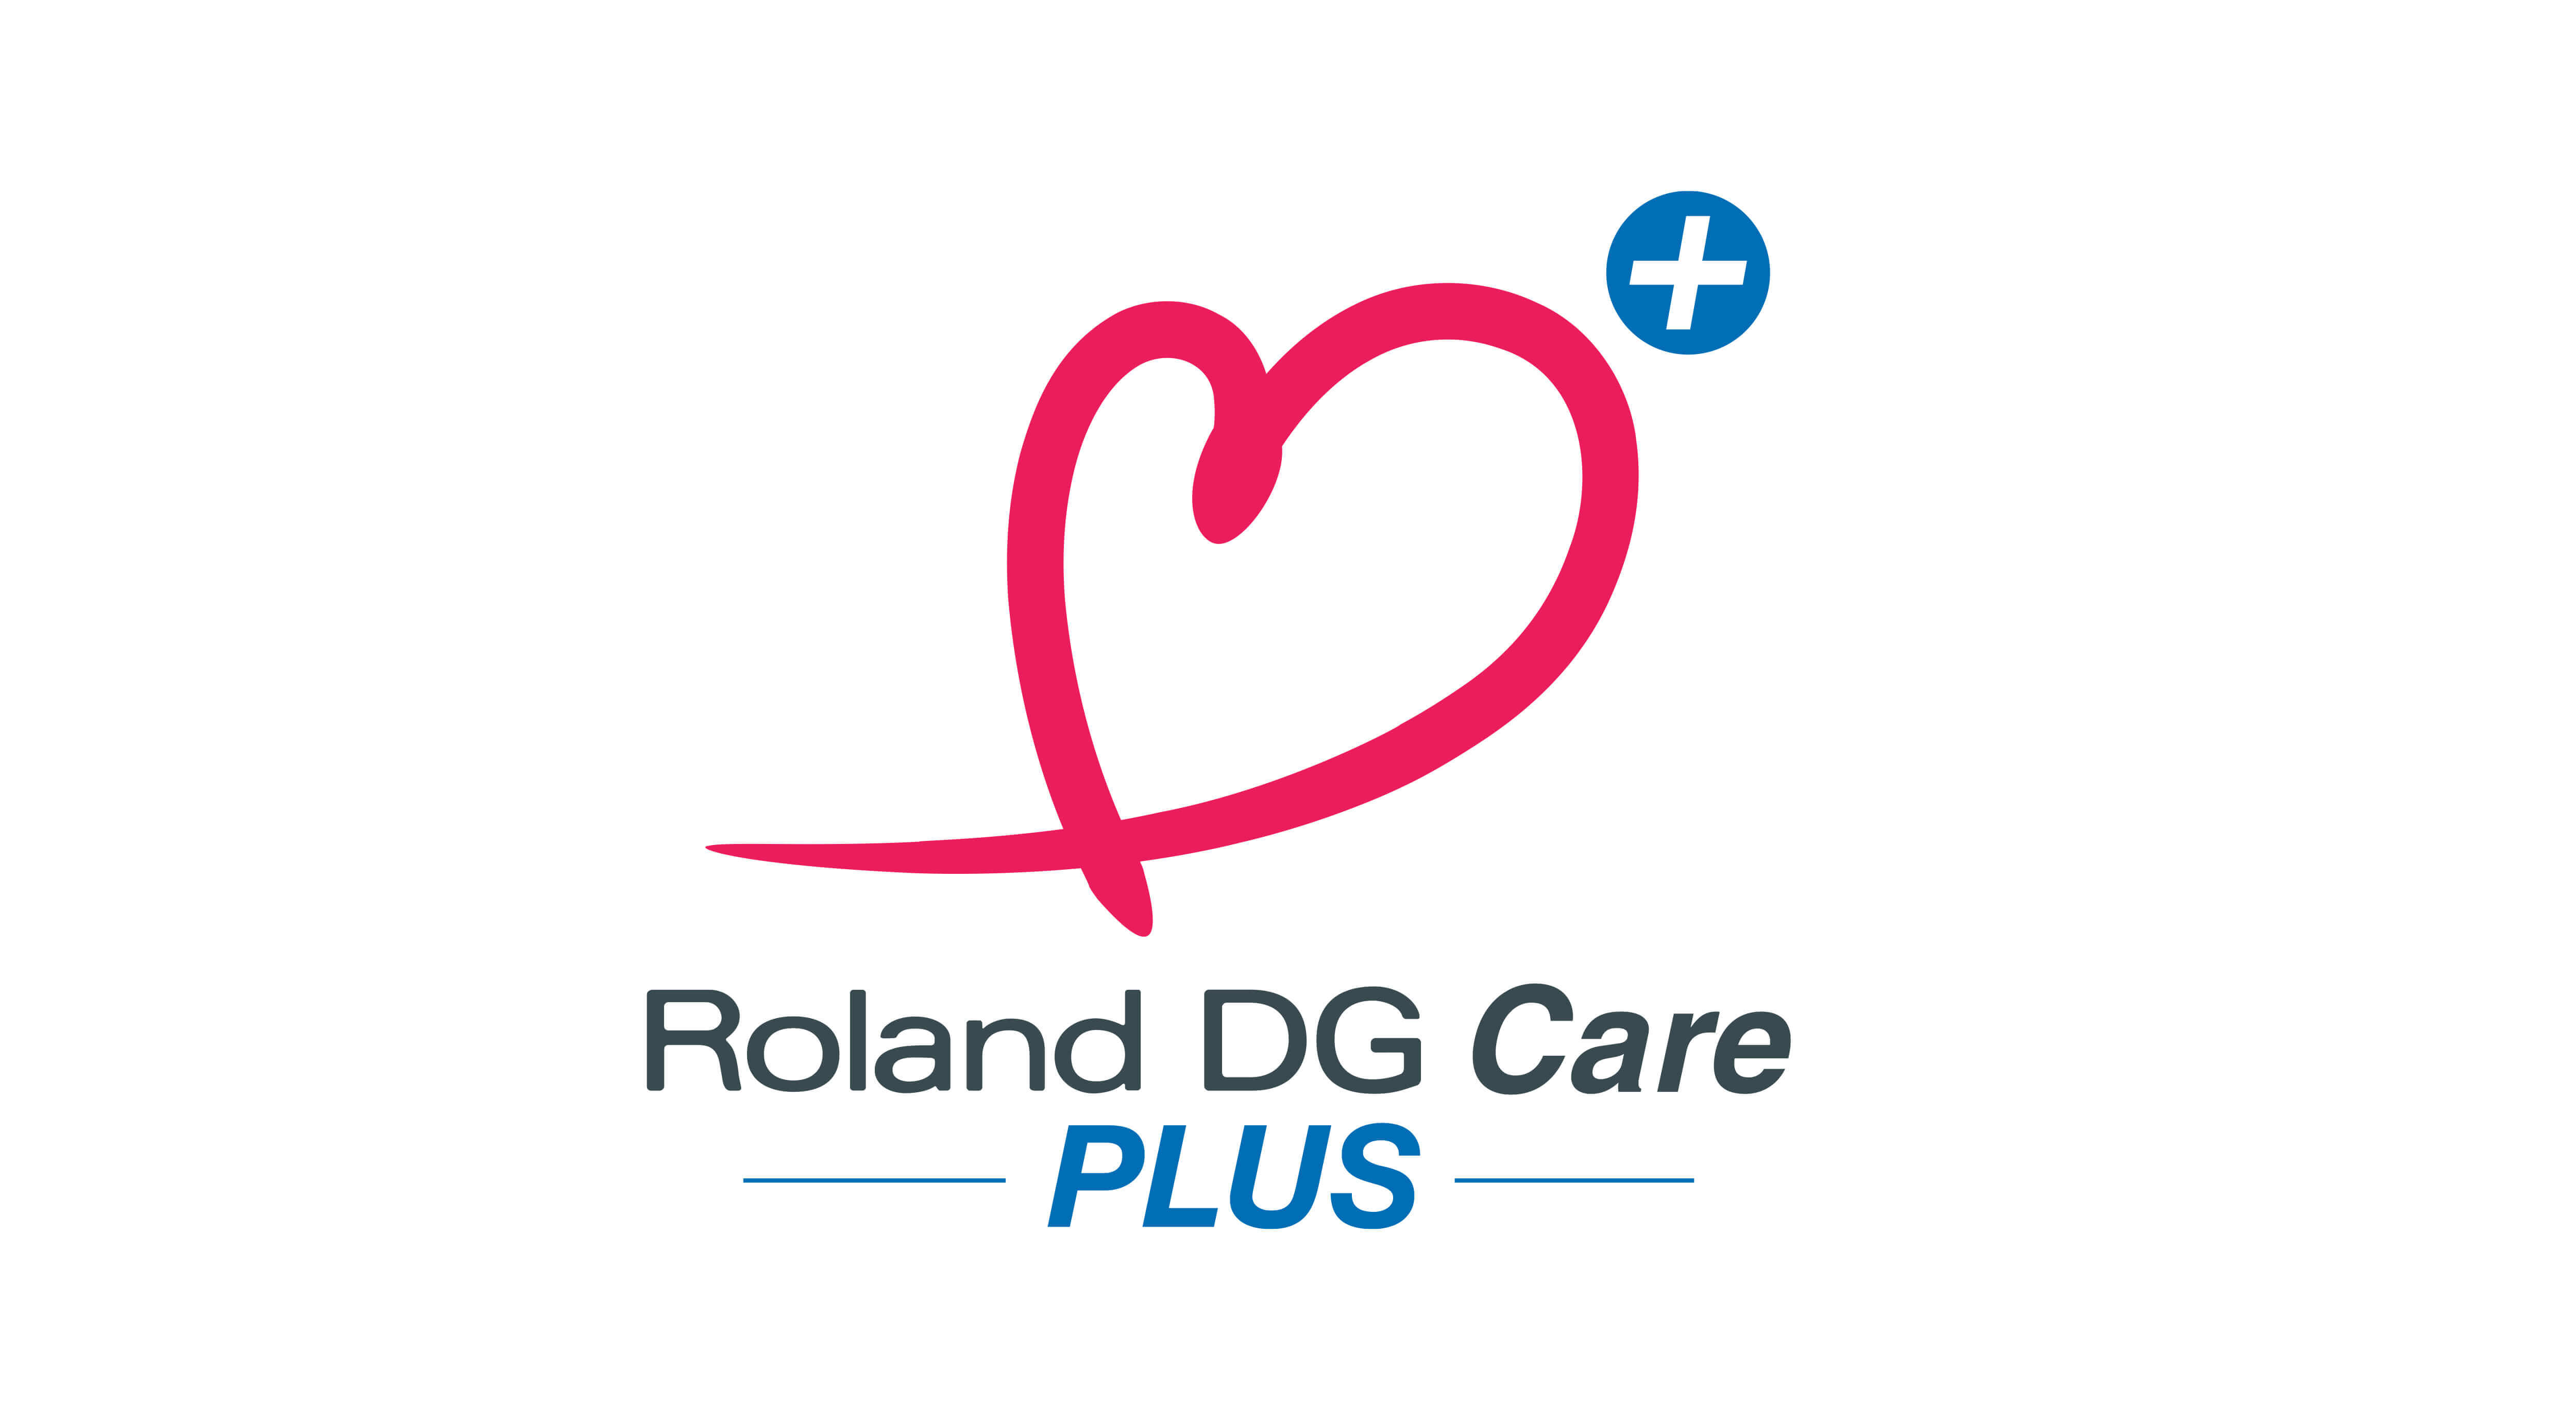 Roland DGA ha lanzado un nuevo programa de garantía extendida Roland DG Care PLUS para impresoras e impresoras/cortadoras TrueVIS™.